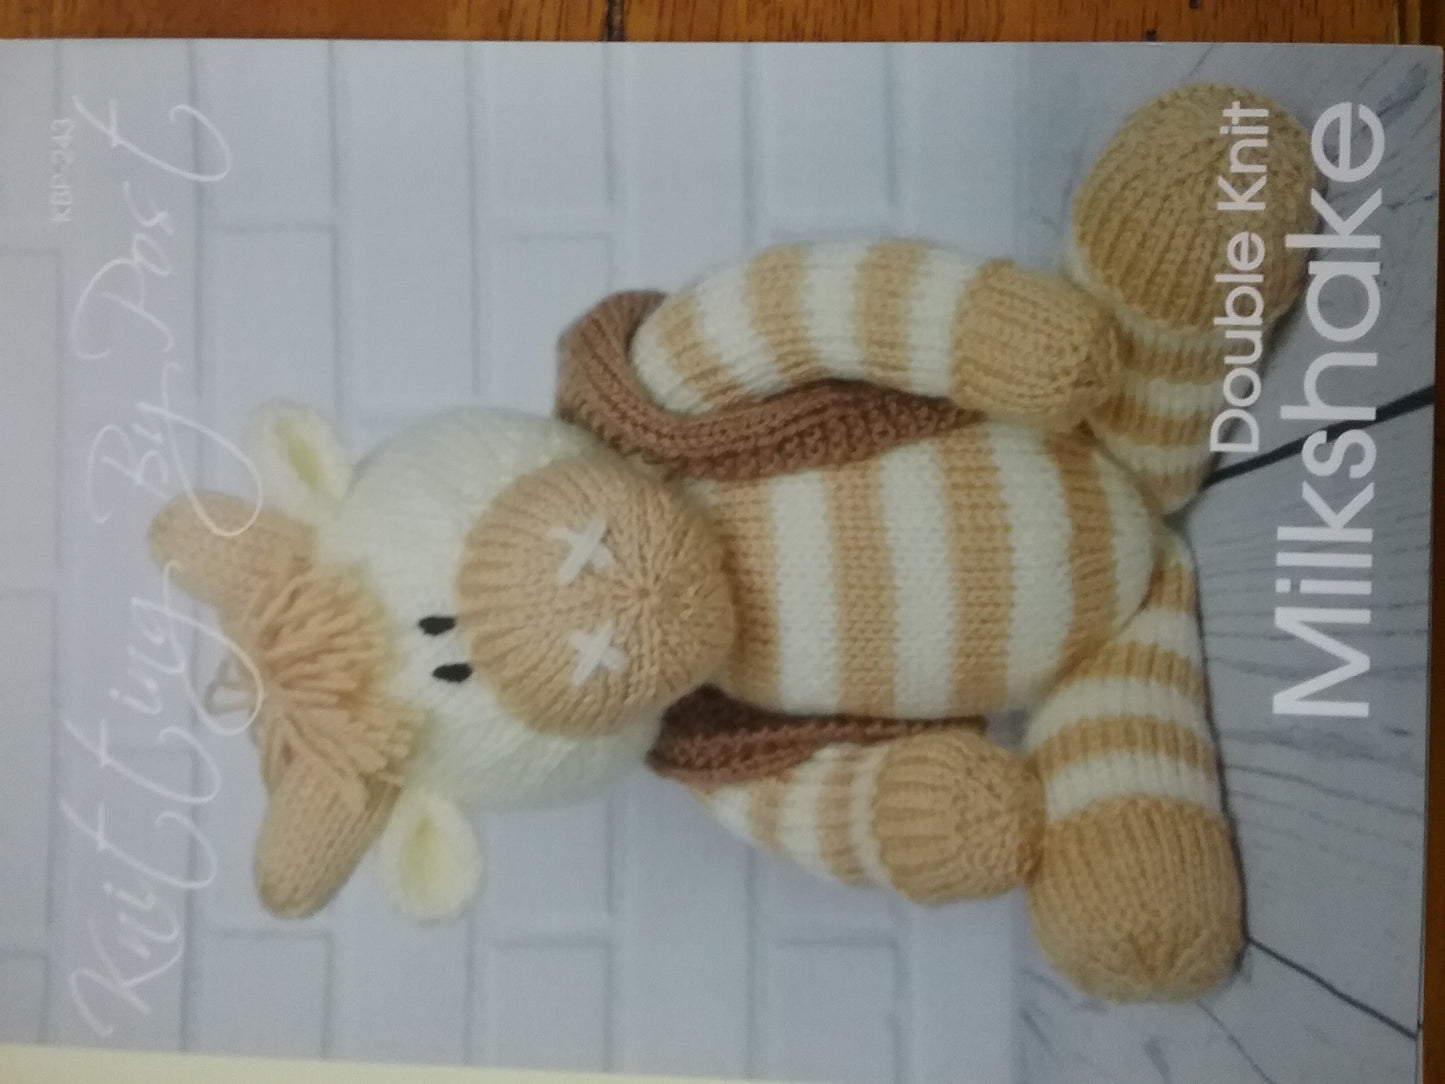 KBP-243 Milkshake toy in DK knitting pattern